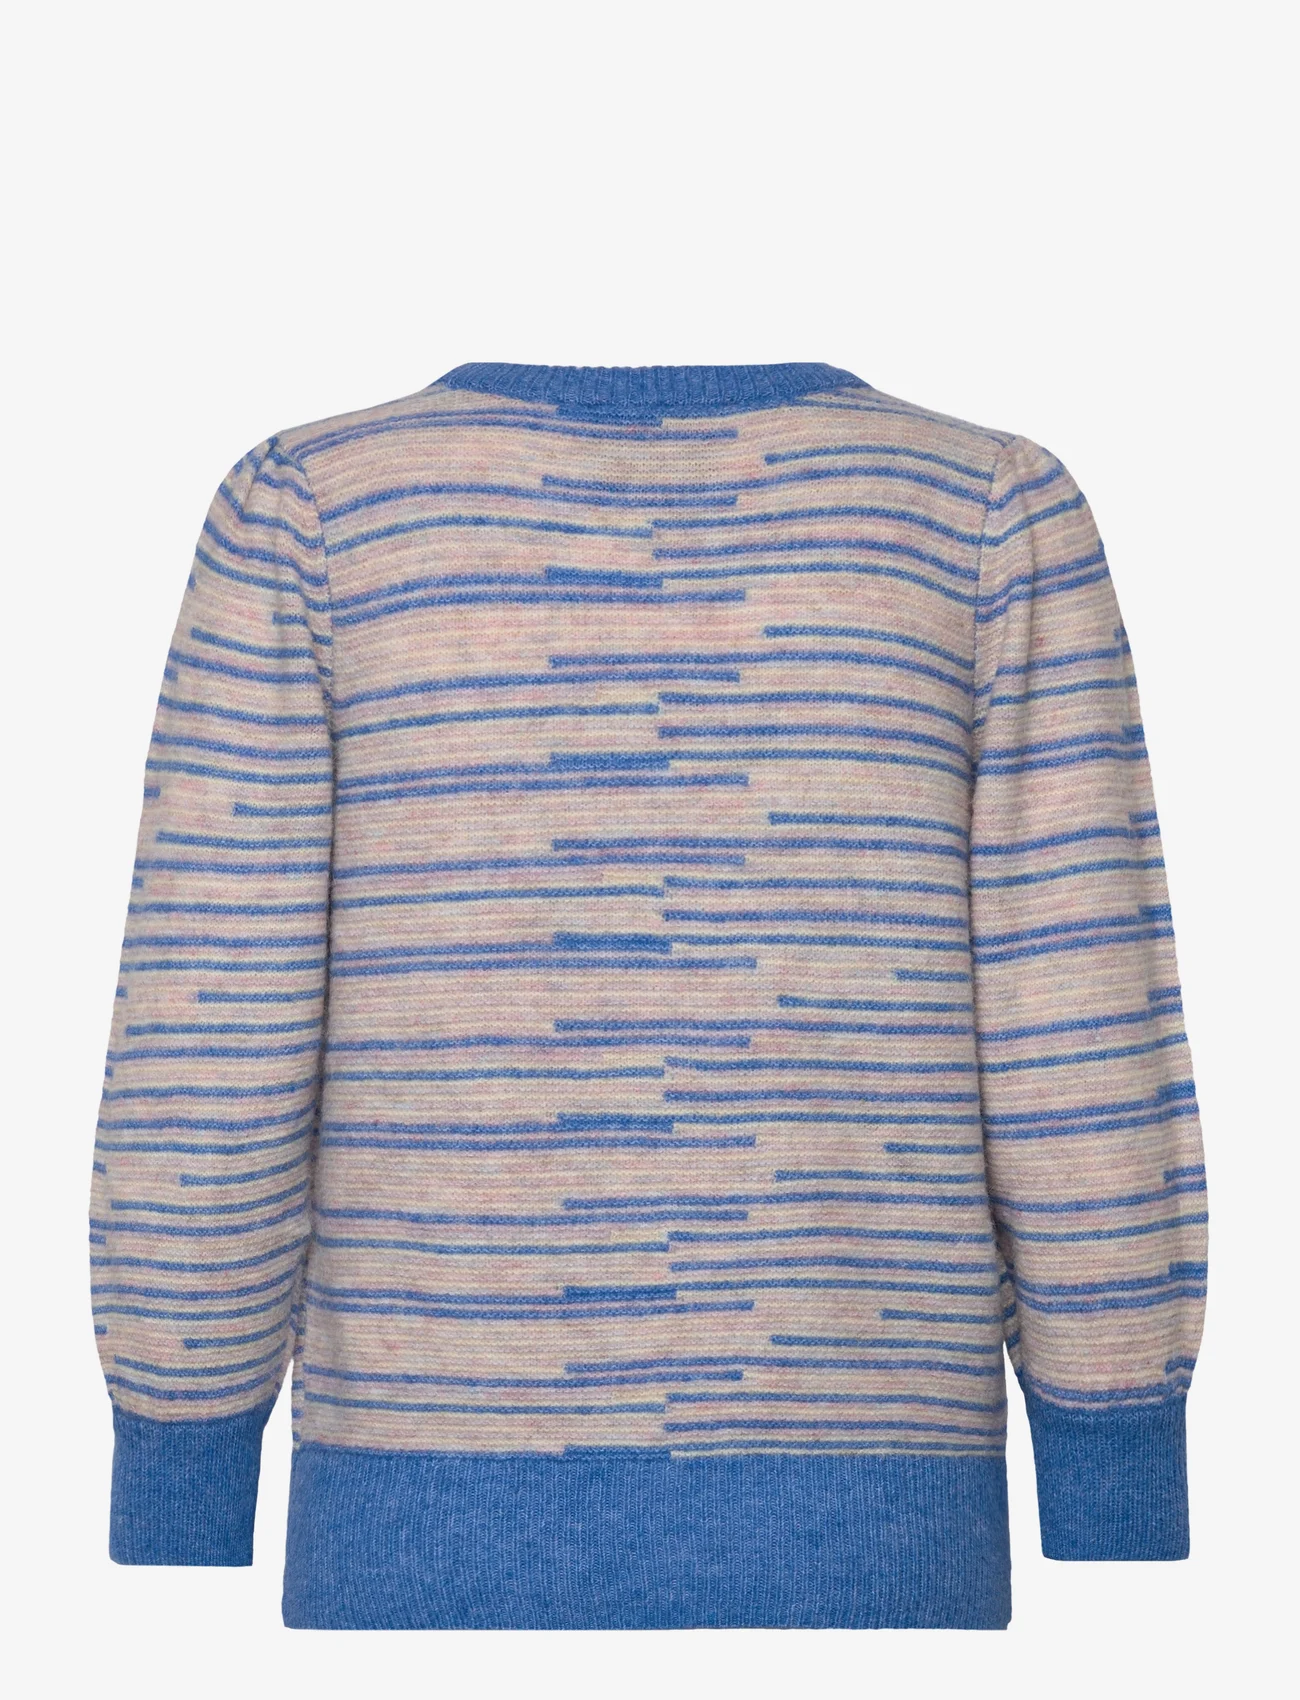 Minus - Marilou 3/4 Sleeve Knit Pullover - džemperi - dresden blue stripe - 1